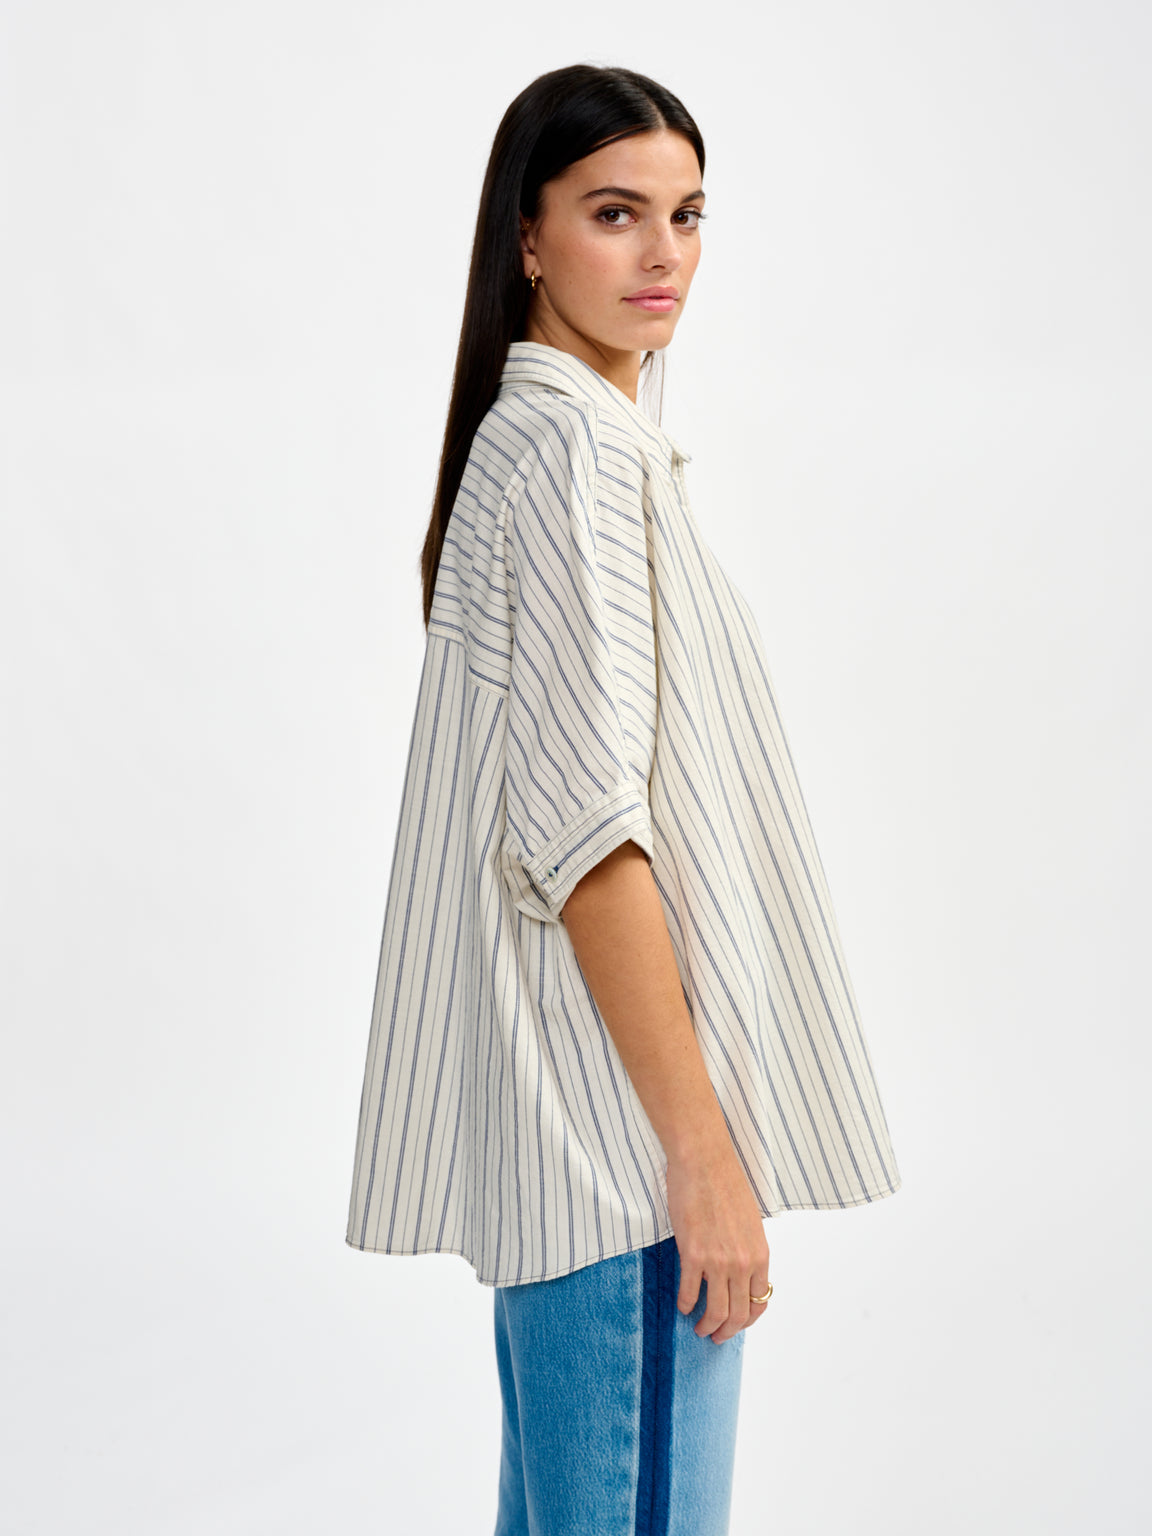 Shirt Gaudi S1020 Stripe-A